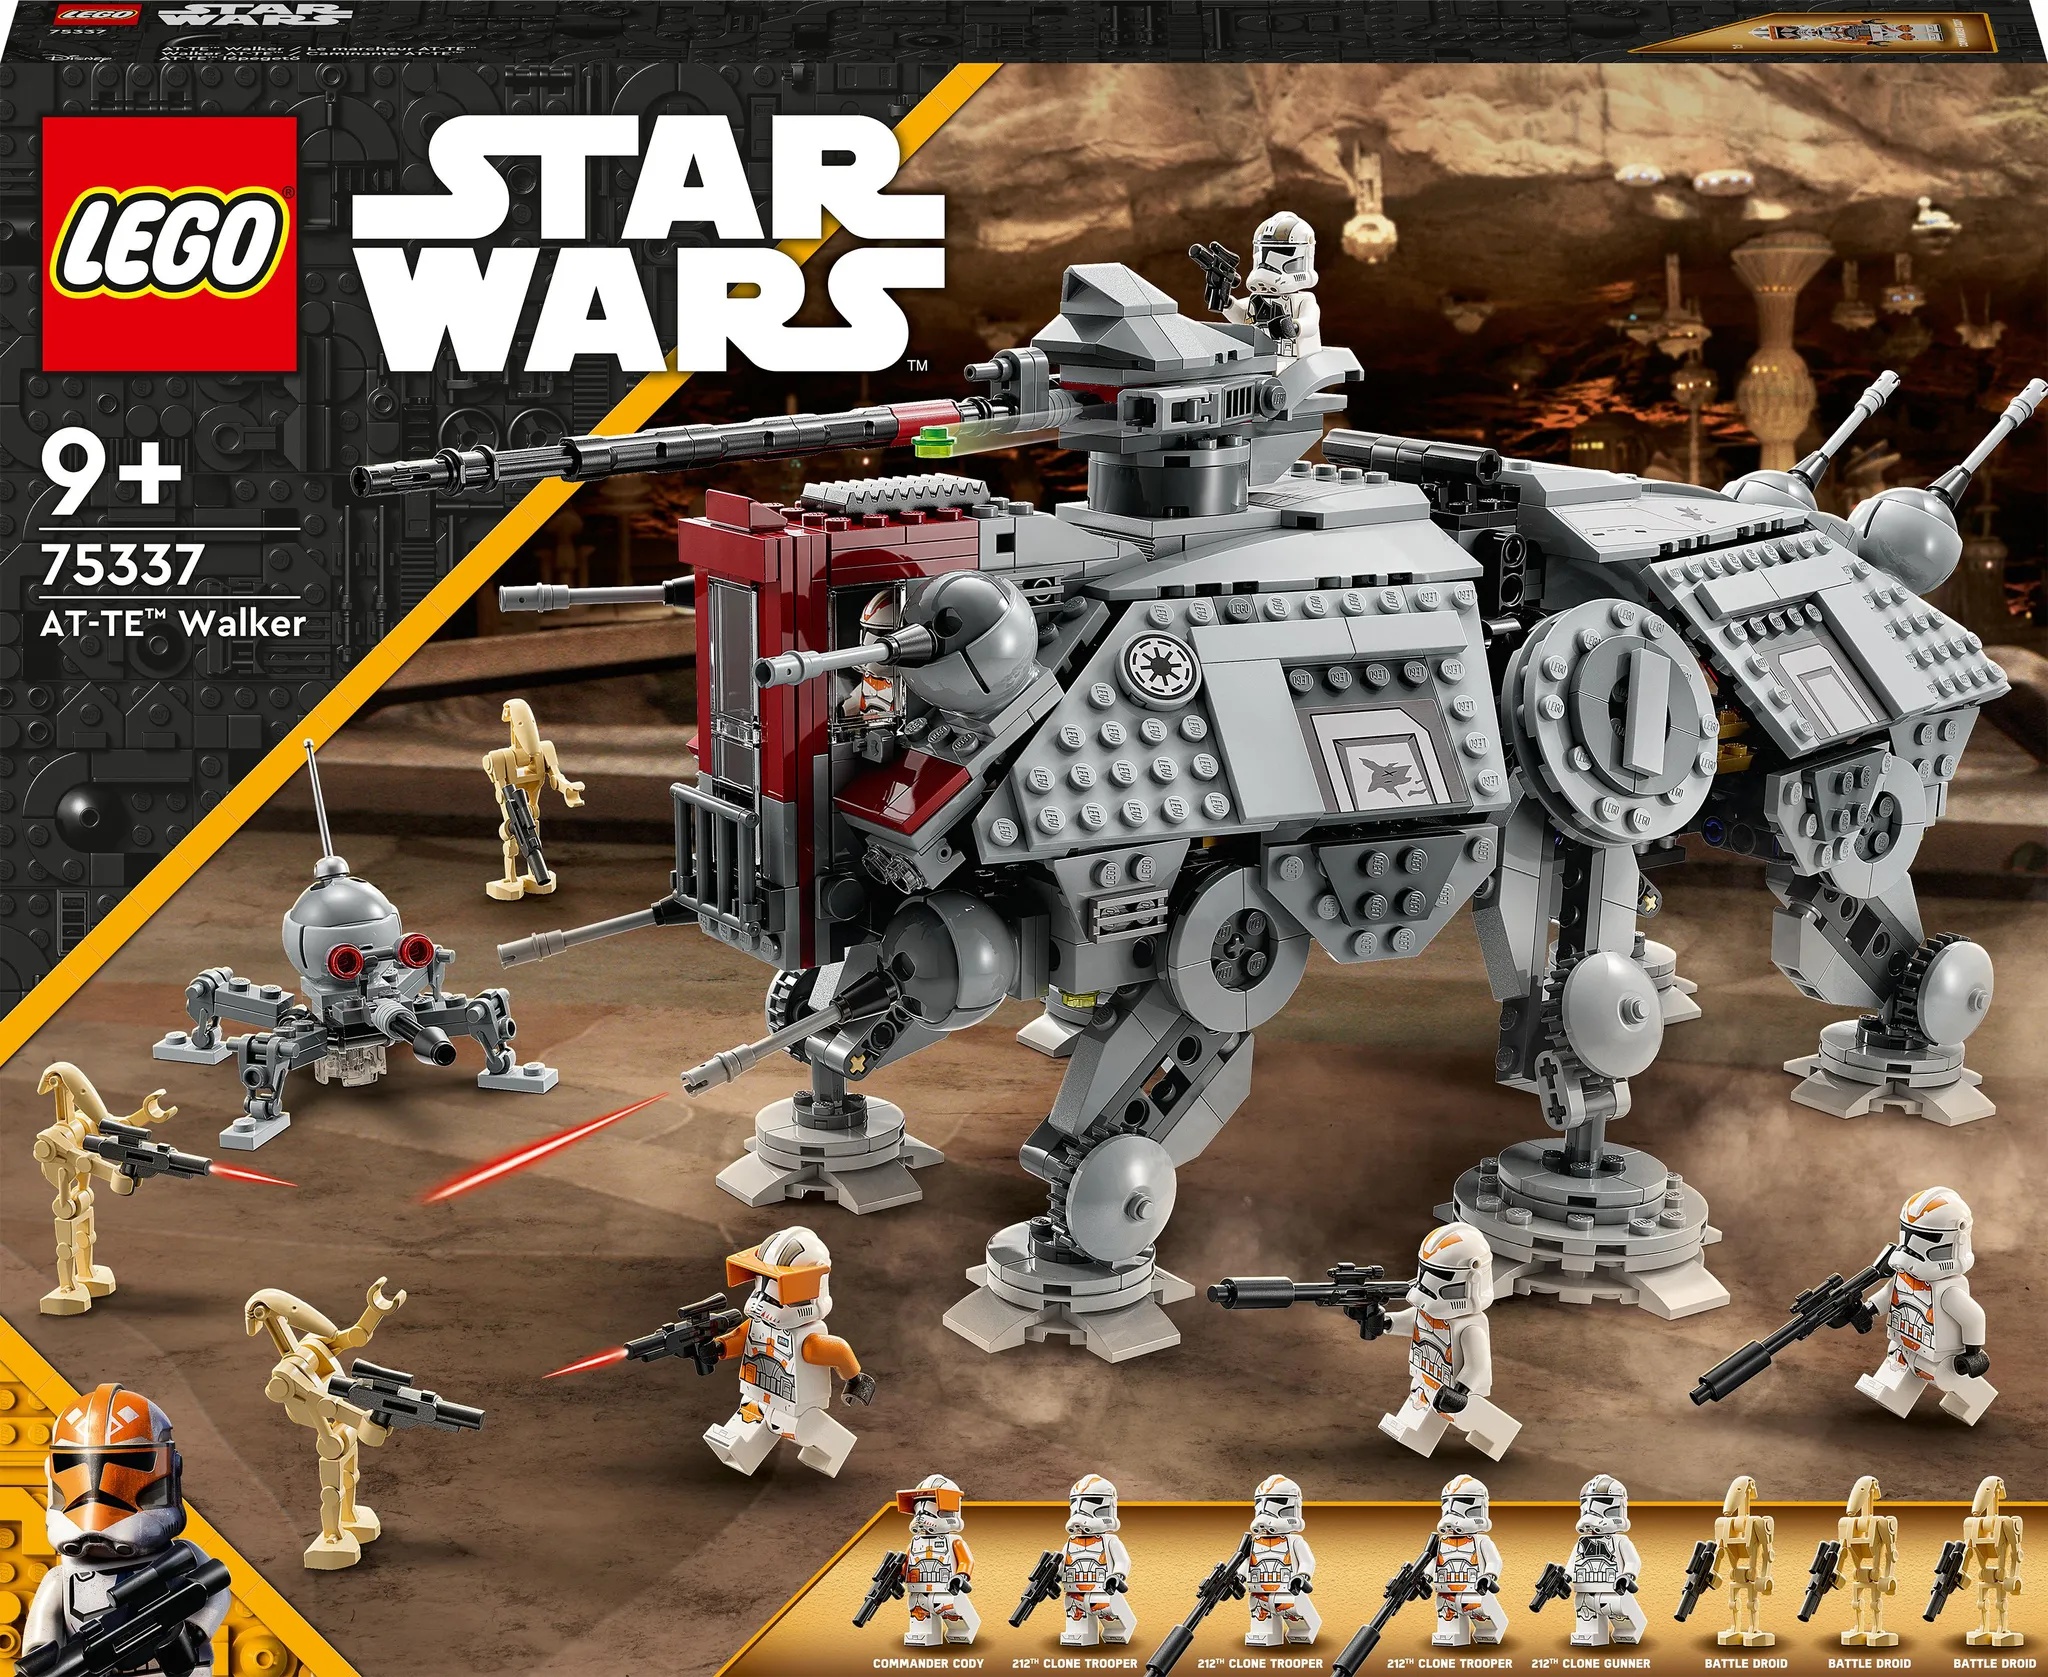 LEGO AT-TE Walker (75337, LEGO Star Wars)